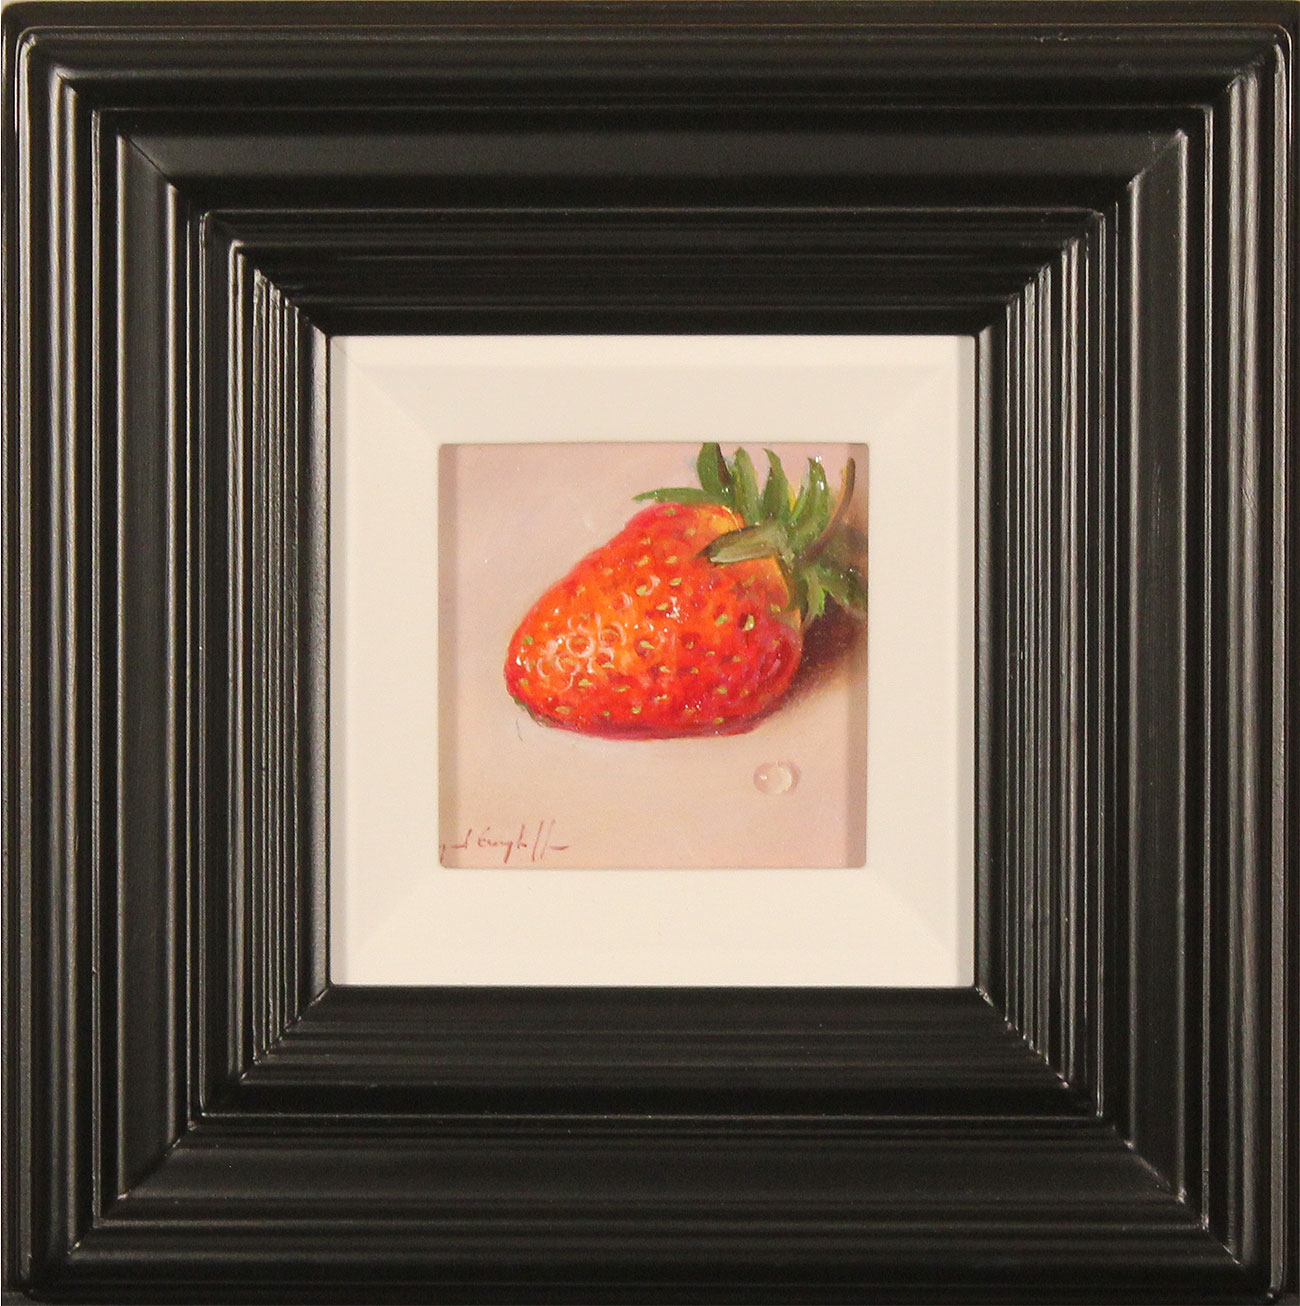 Raymond Campbell, Original oil painting on panel, Strawberry